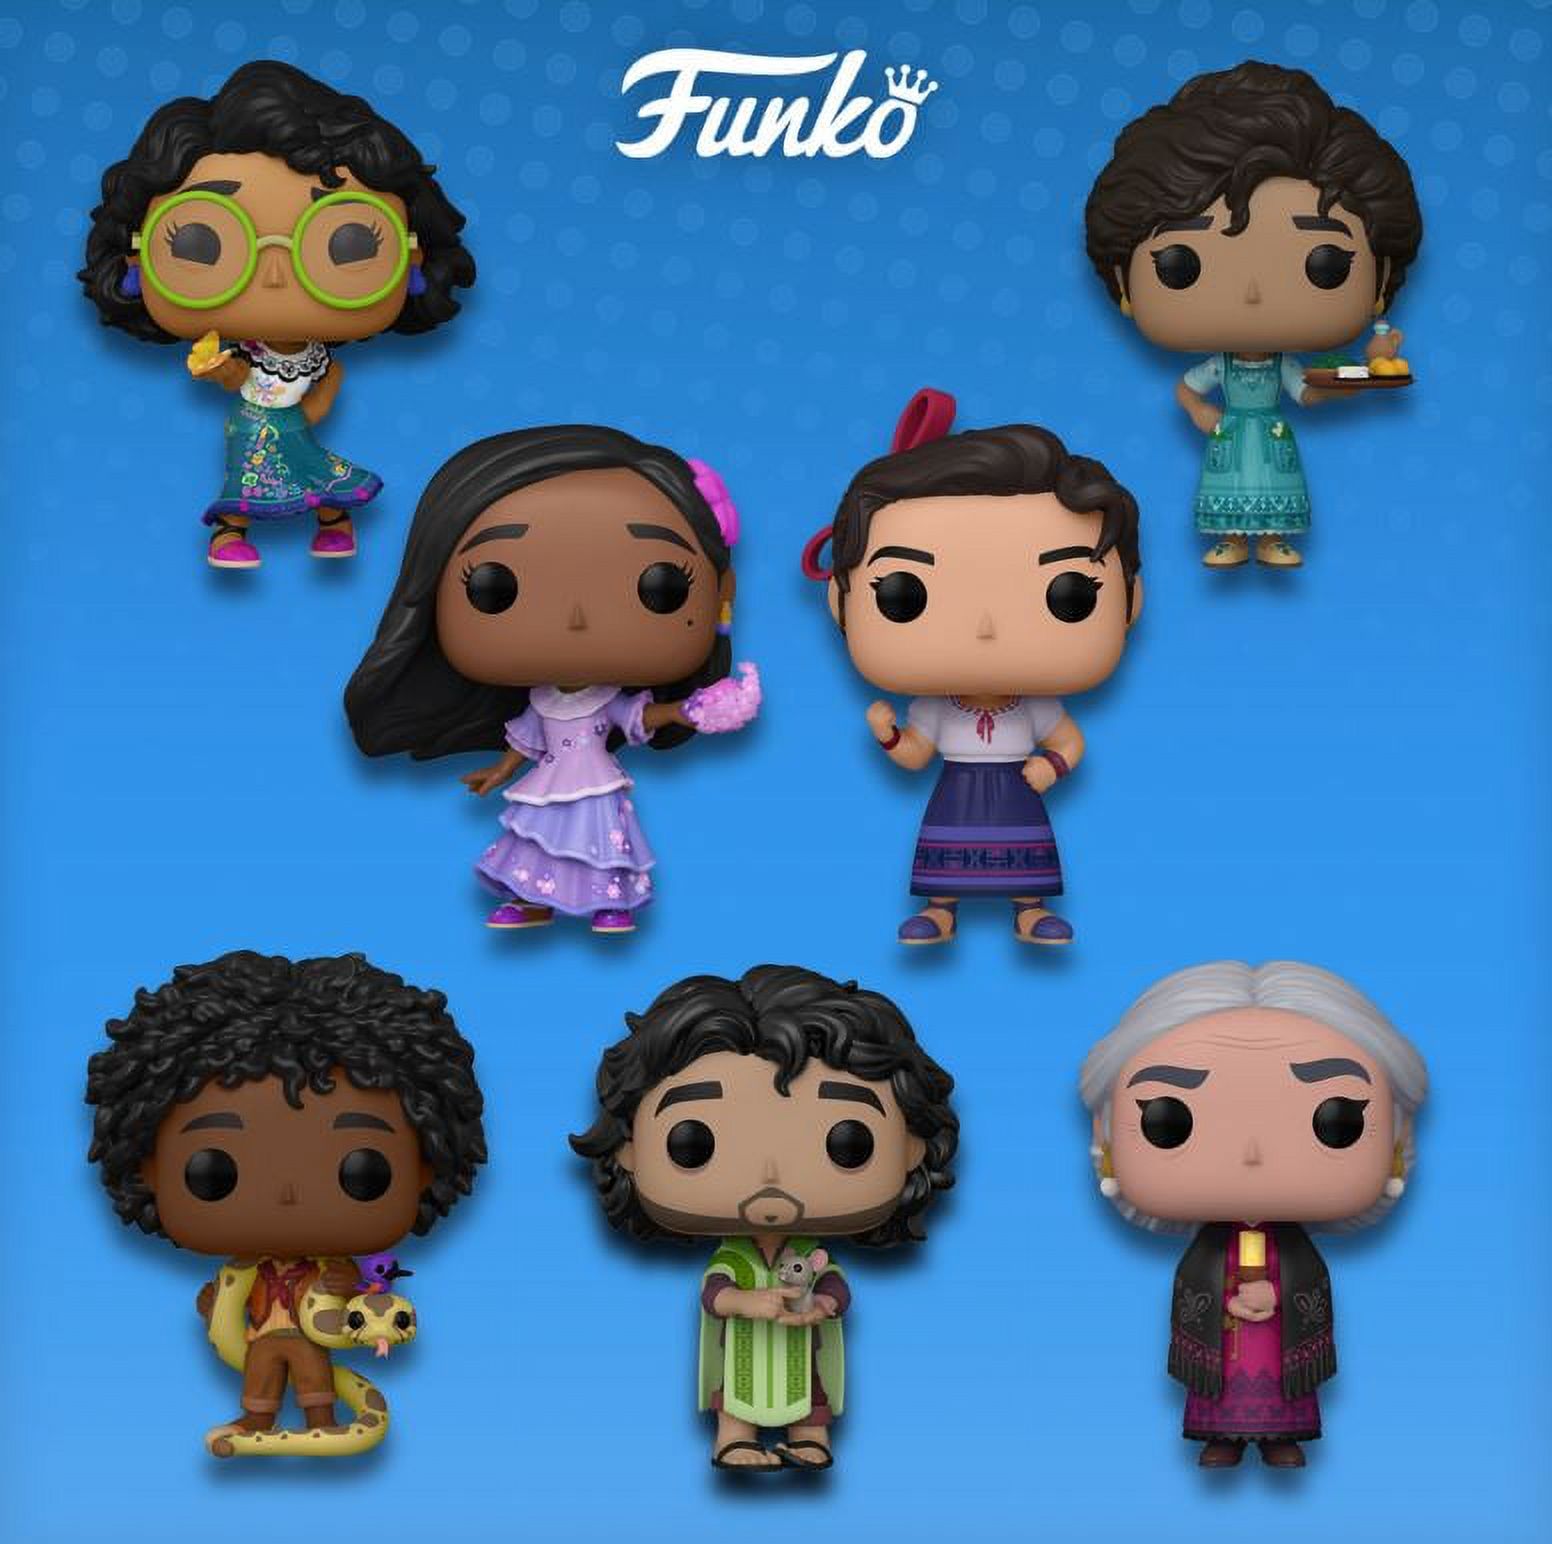 Funko Pop! Disney: Encanto - Set of 7 Vinyl Figures (Mirabel Madrigal / Isabela Madrigal / Luisa Madrigal / Julieta Madrigal / Antonio Madrigal / Bruno Madrigal / Abuela Alma Madrigal) - image 1 of 16